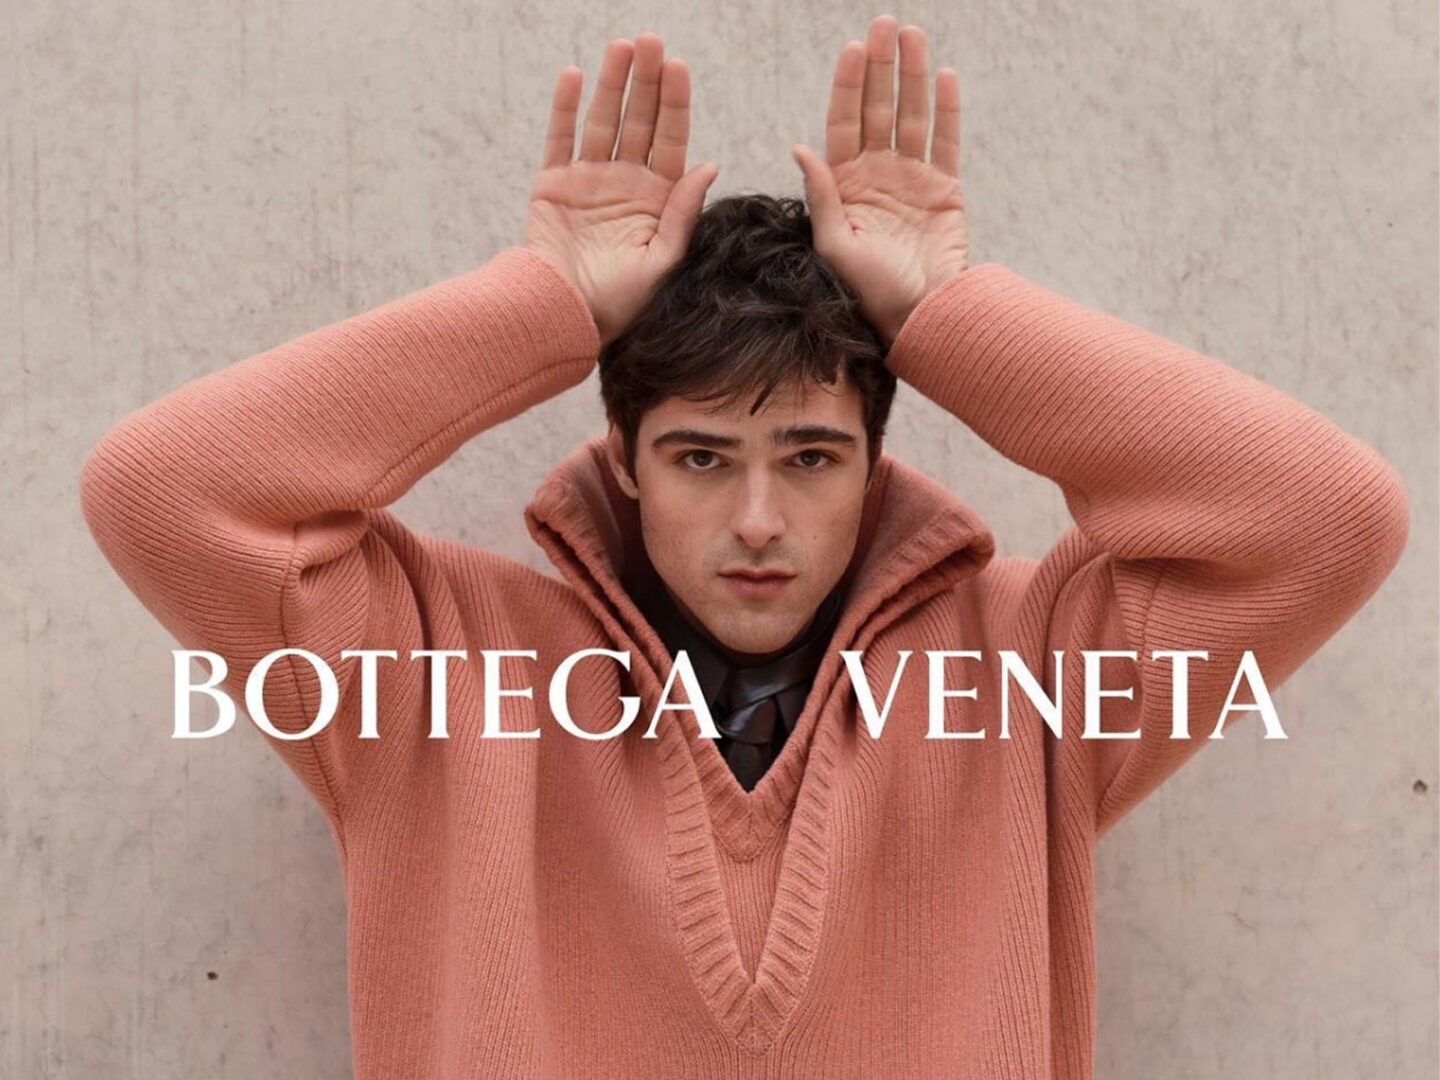 Jacob Elordi is Bottega Veneta’s new ambassador